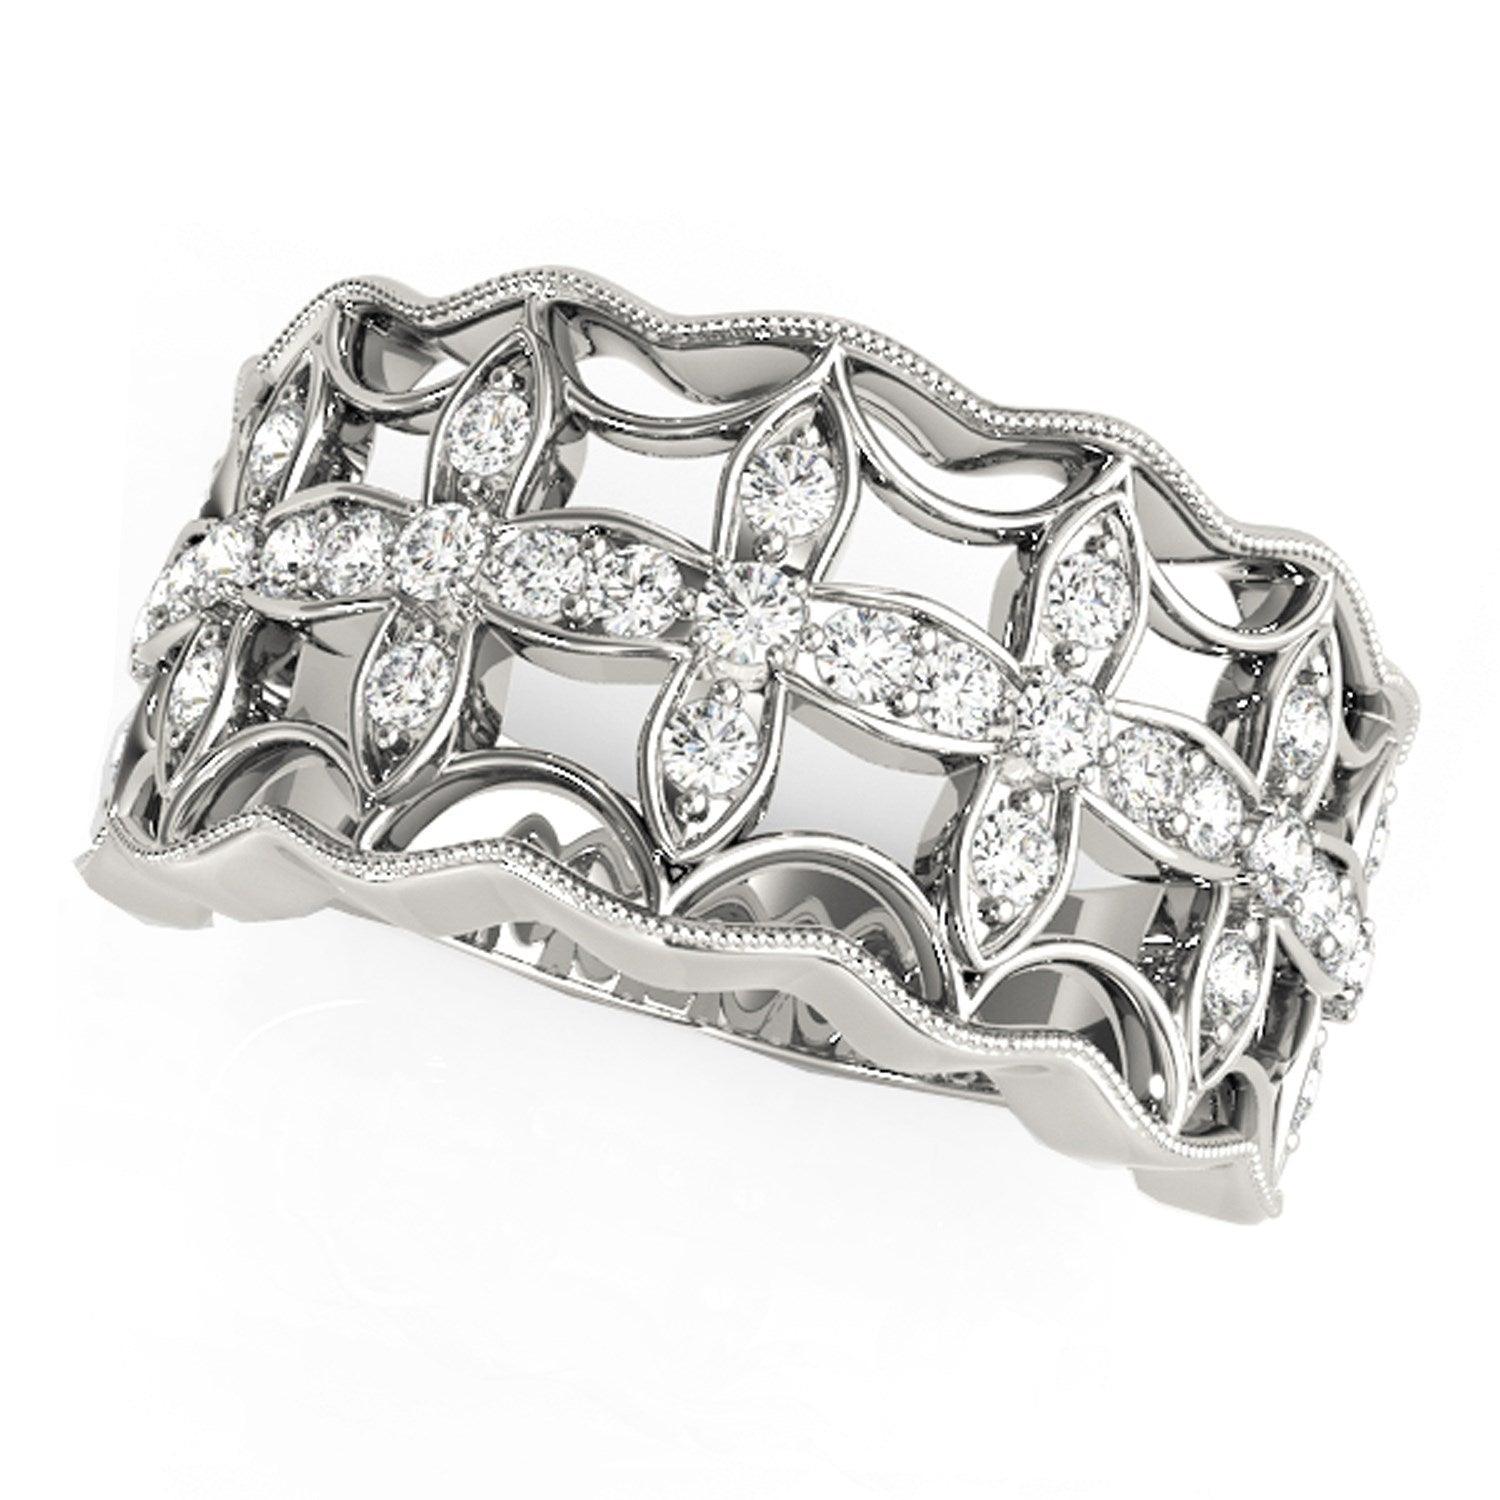 Diamond Studded Four Leaf Clover Motif Ring in 14k White Gold (1/4 cttw) - Justin Kyne Brand